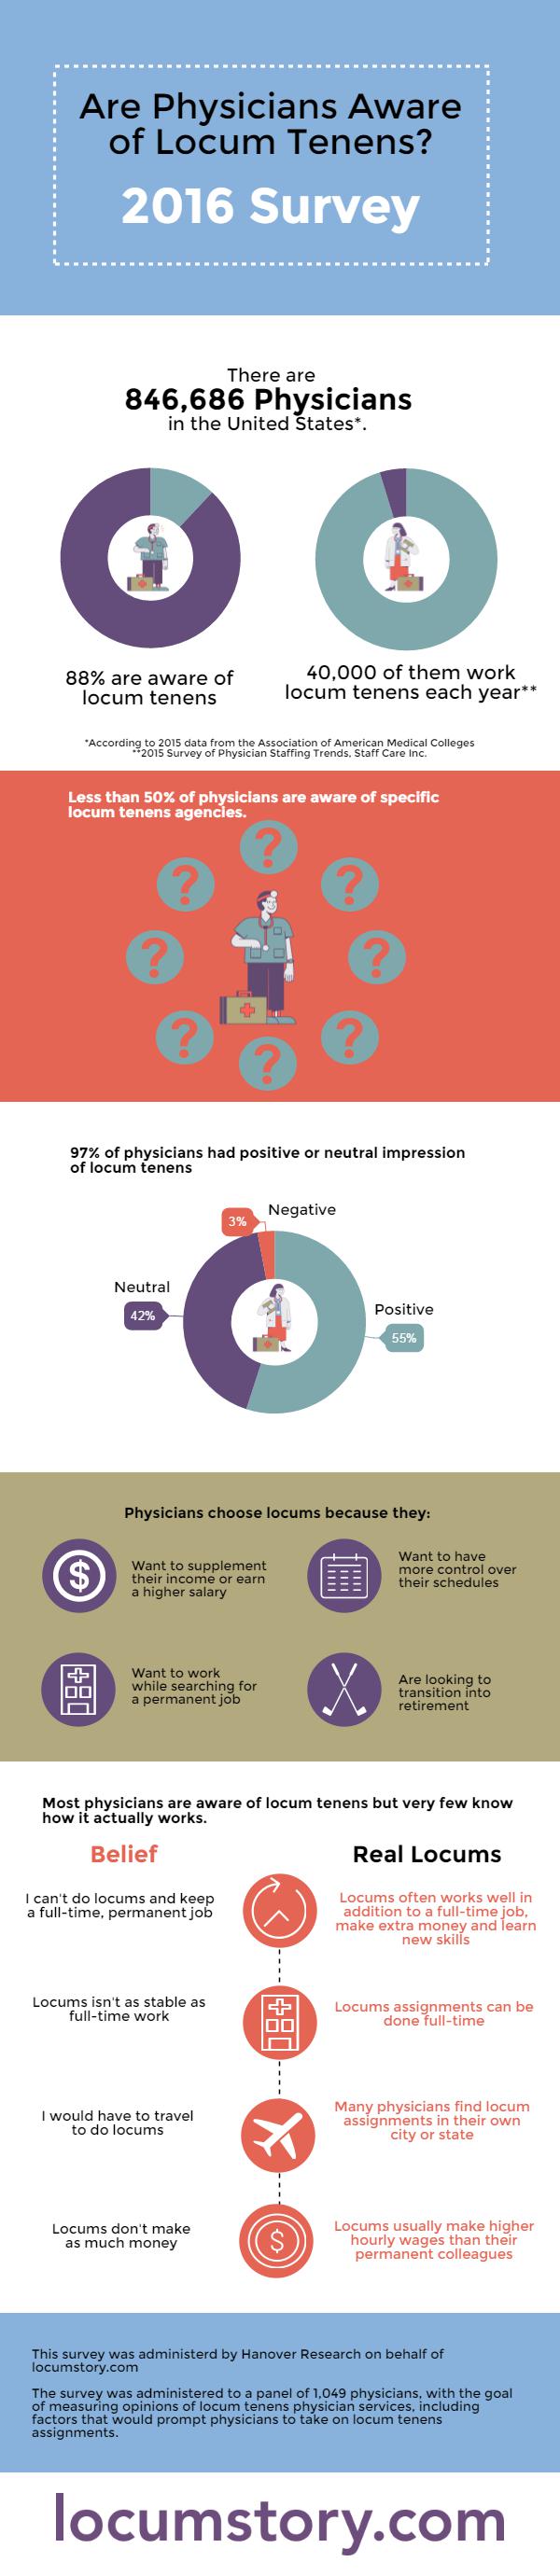 physician-awareness-of-locums-infographic